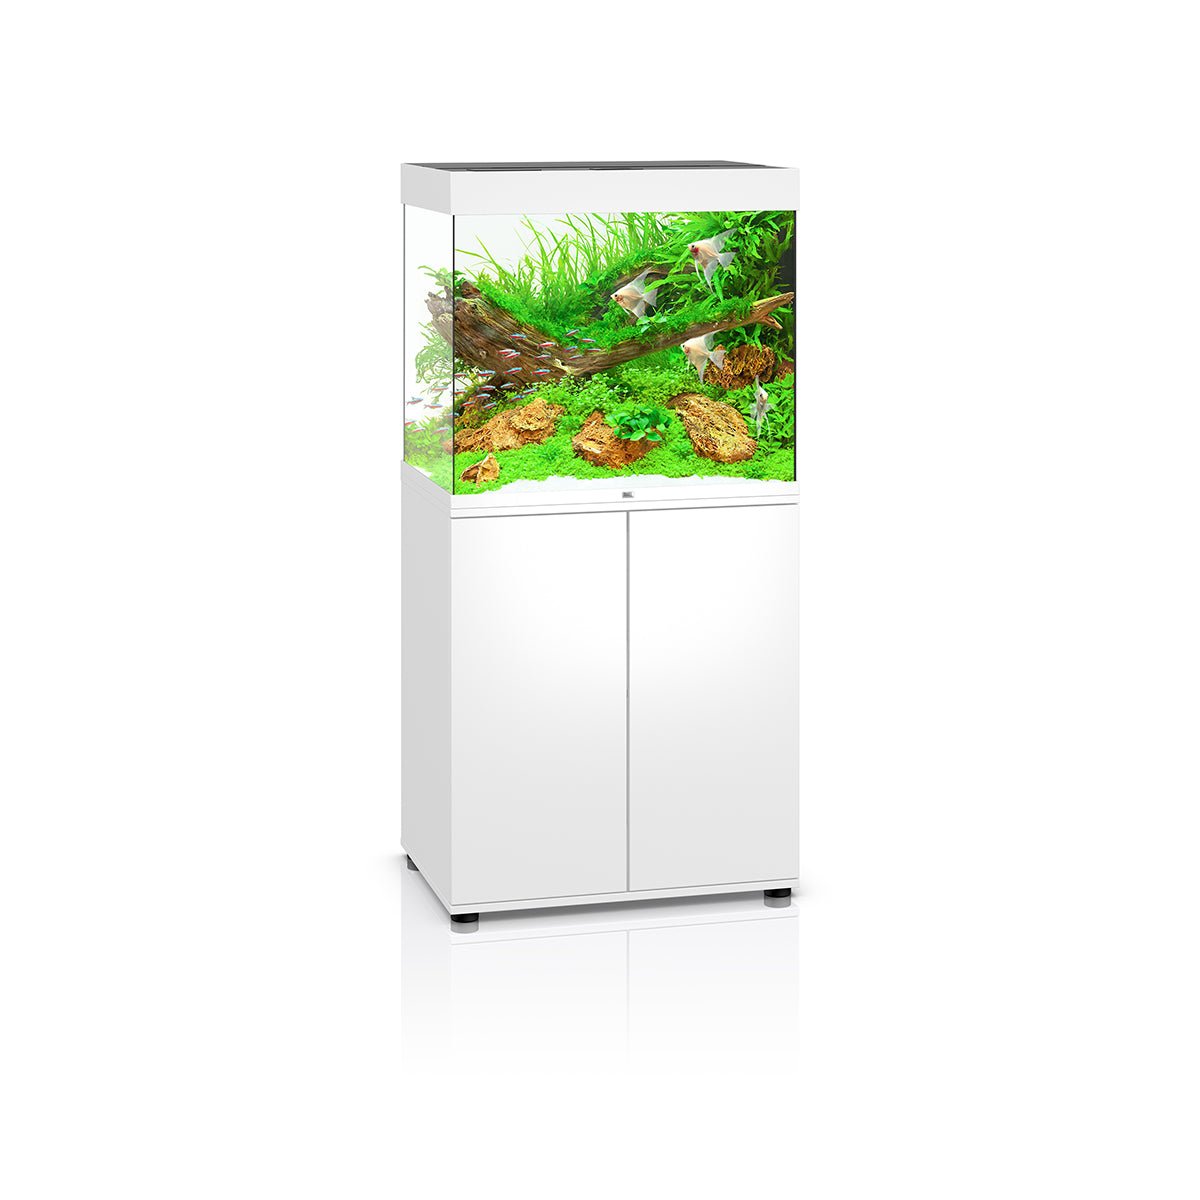 Juwel Lido 200 LED Aquarium and Cabinet (White) - Charterhouse Aquatics